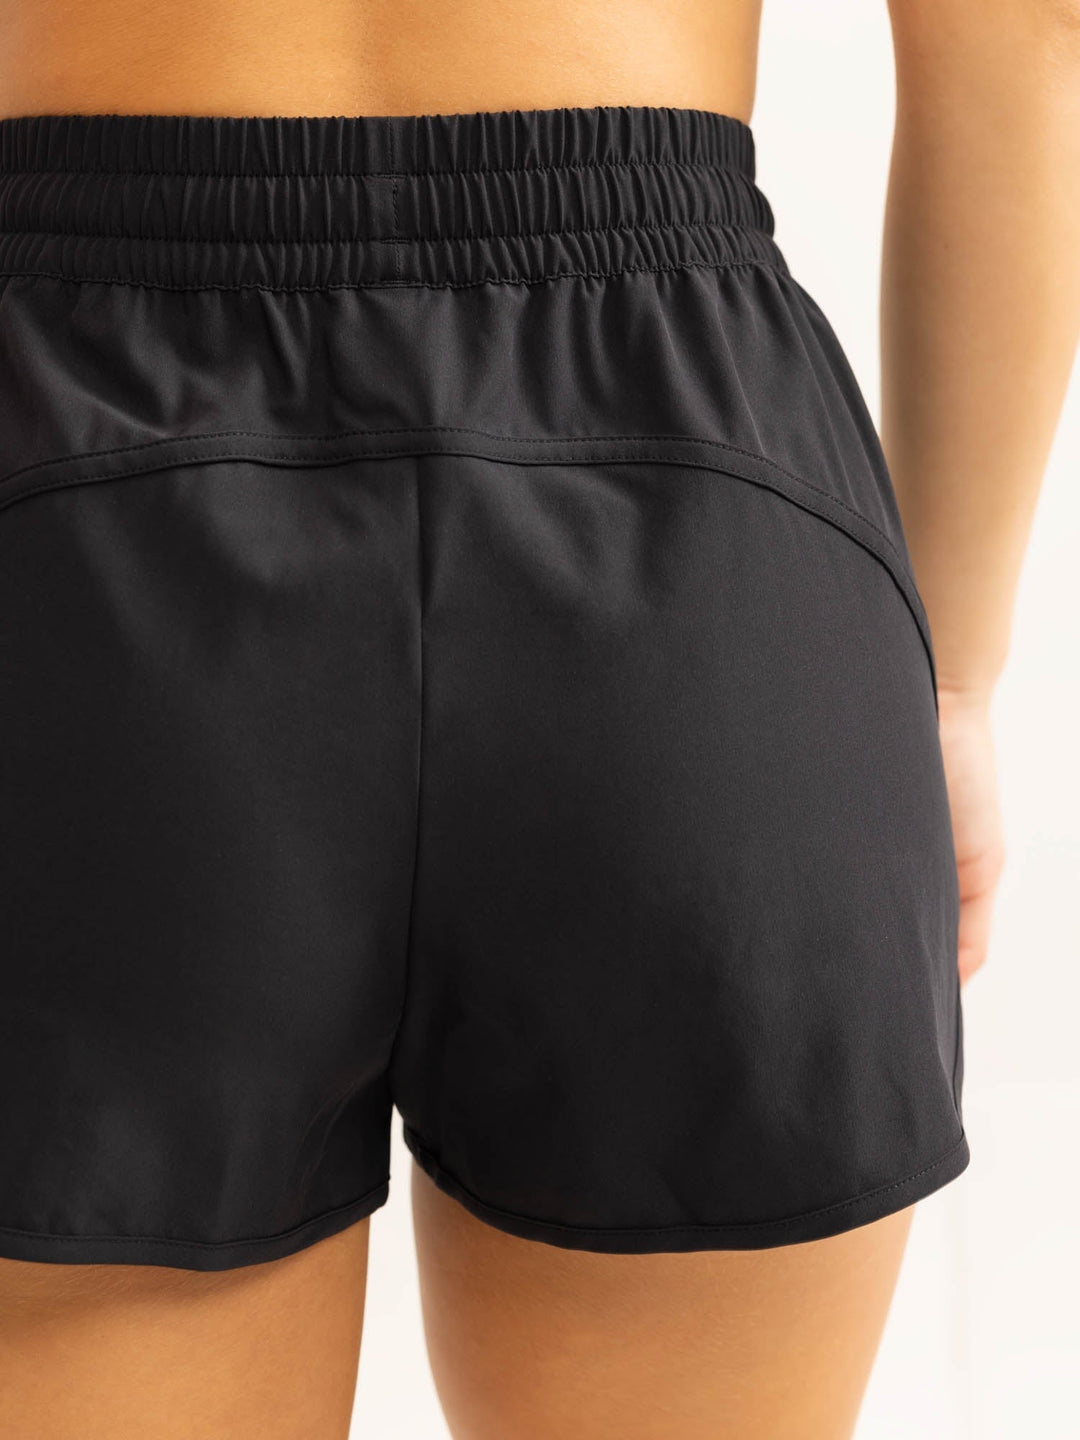 Persist Training Shorts - Black Clothing Ryderwear 